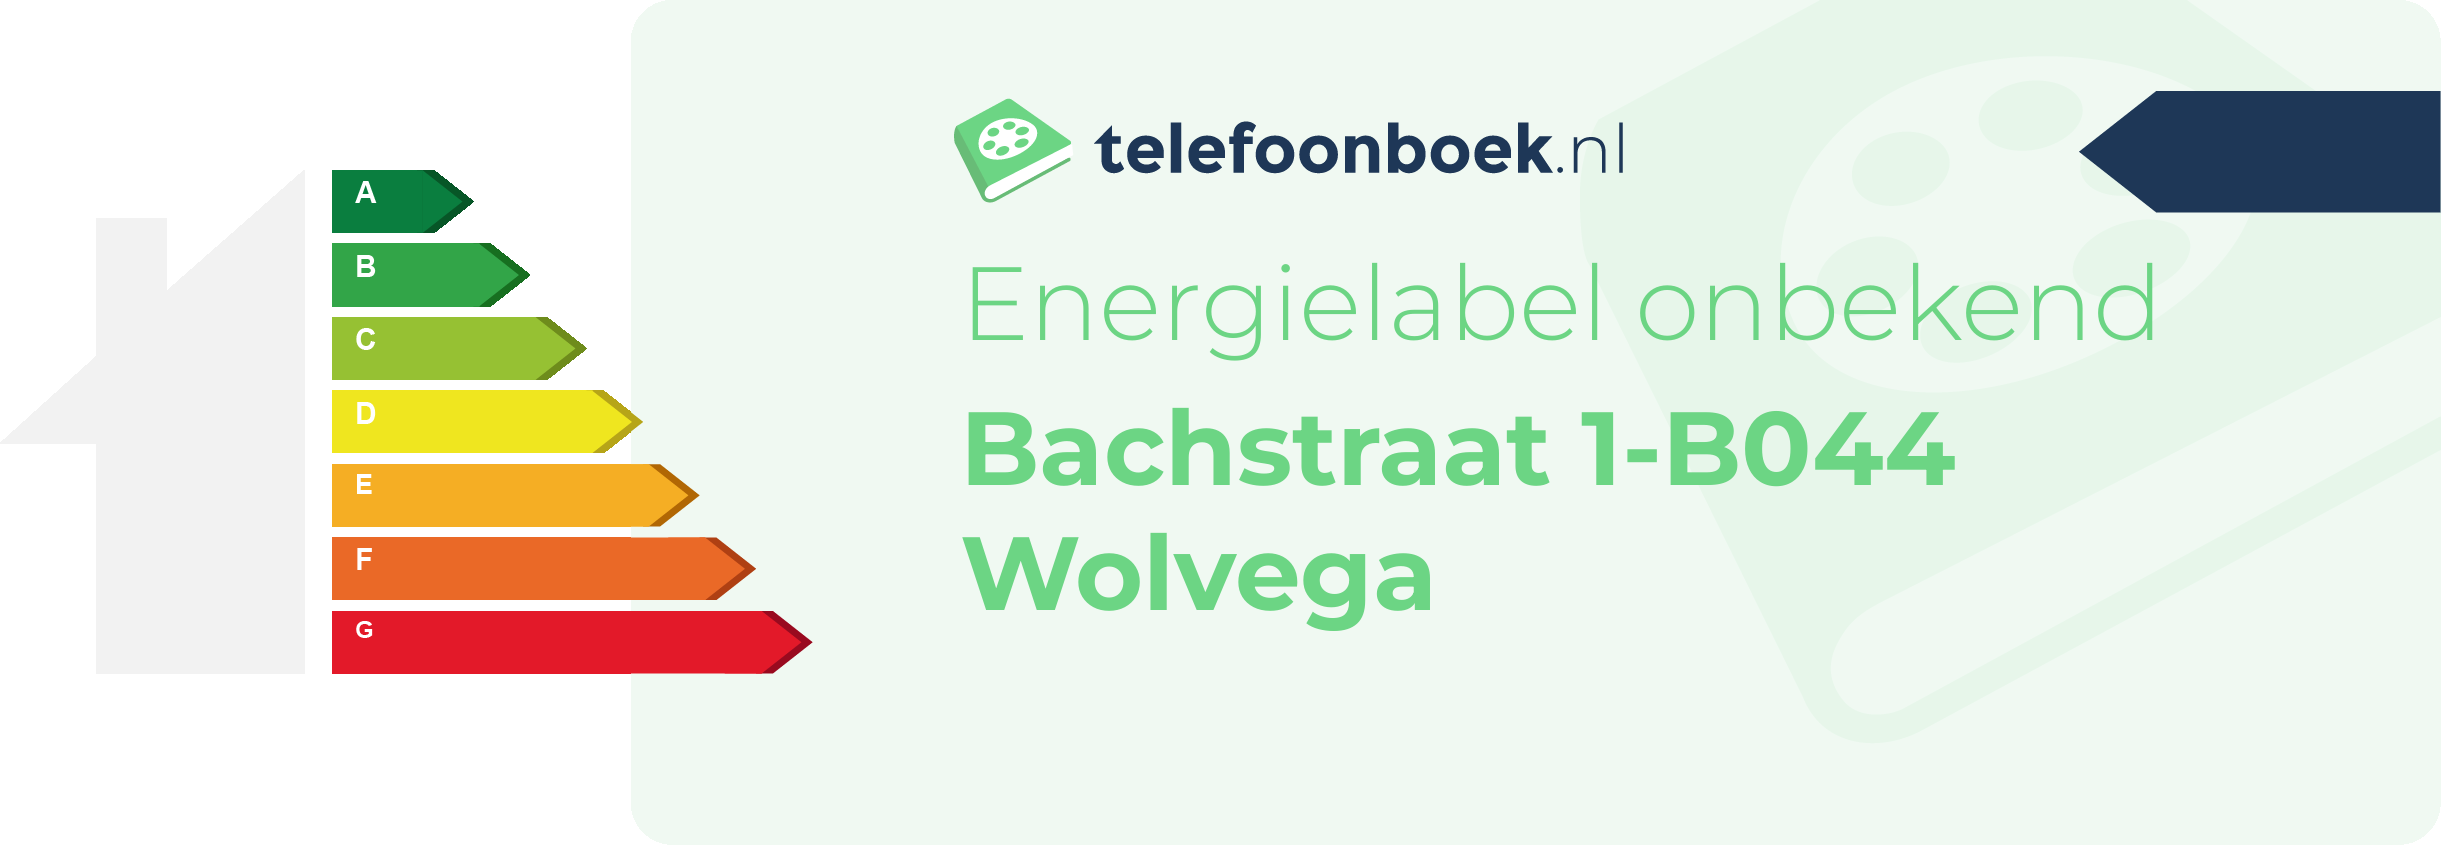 Energielabel Bachstraat 1-B044 Wolvega